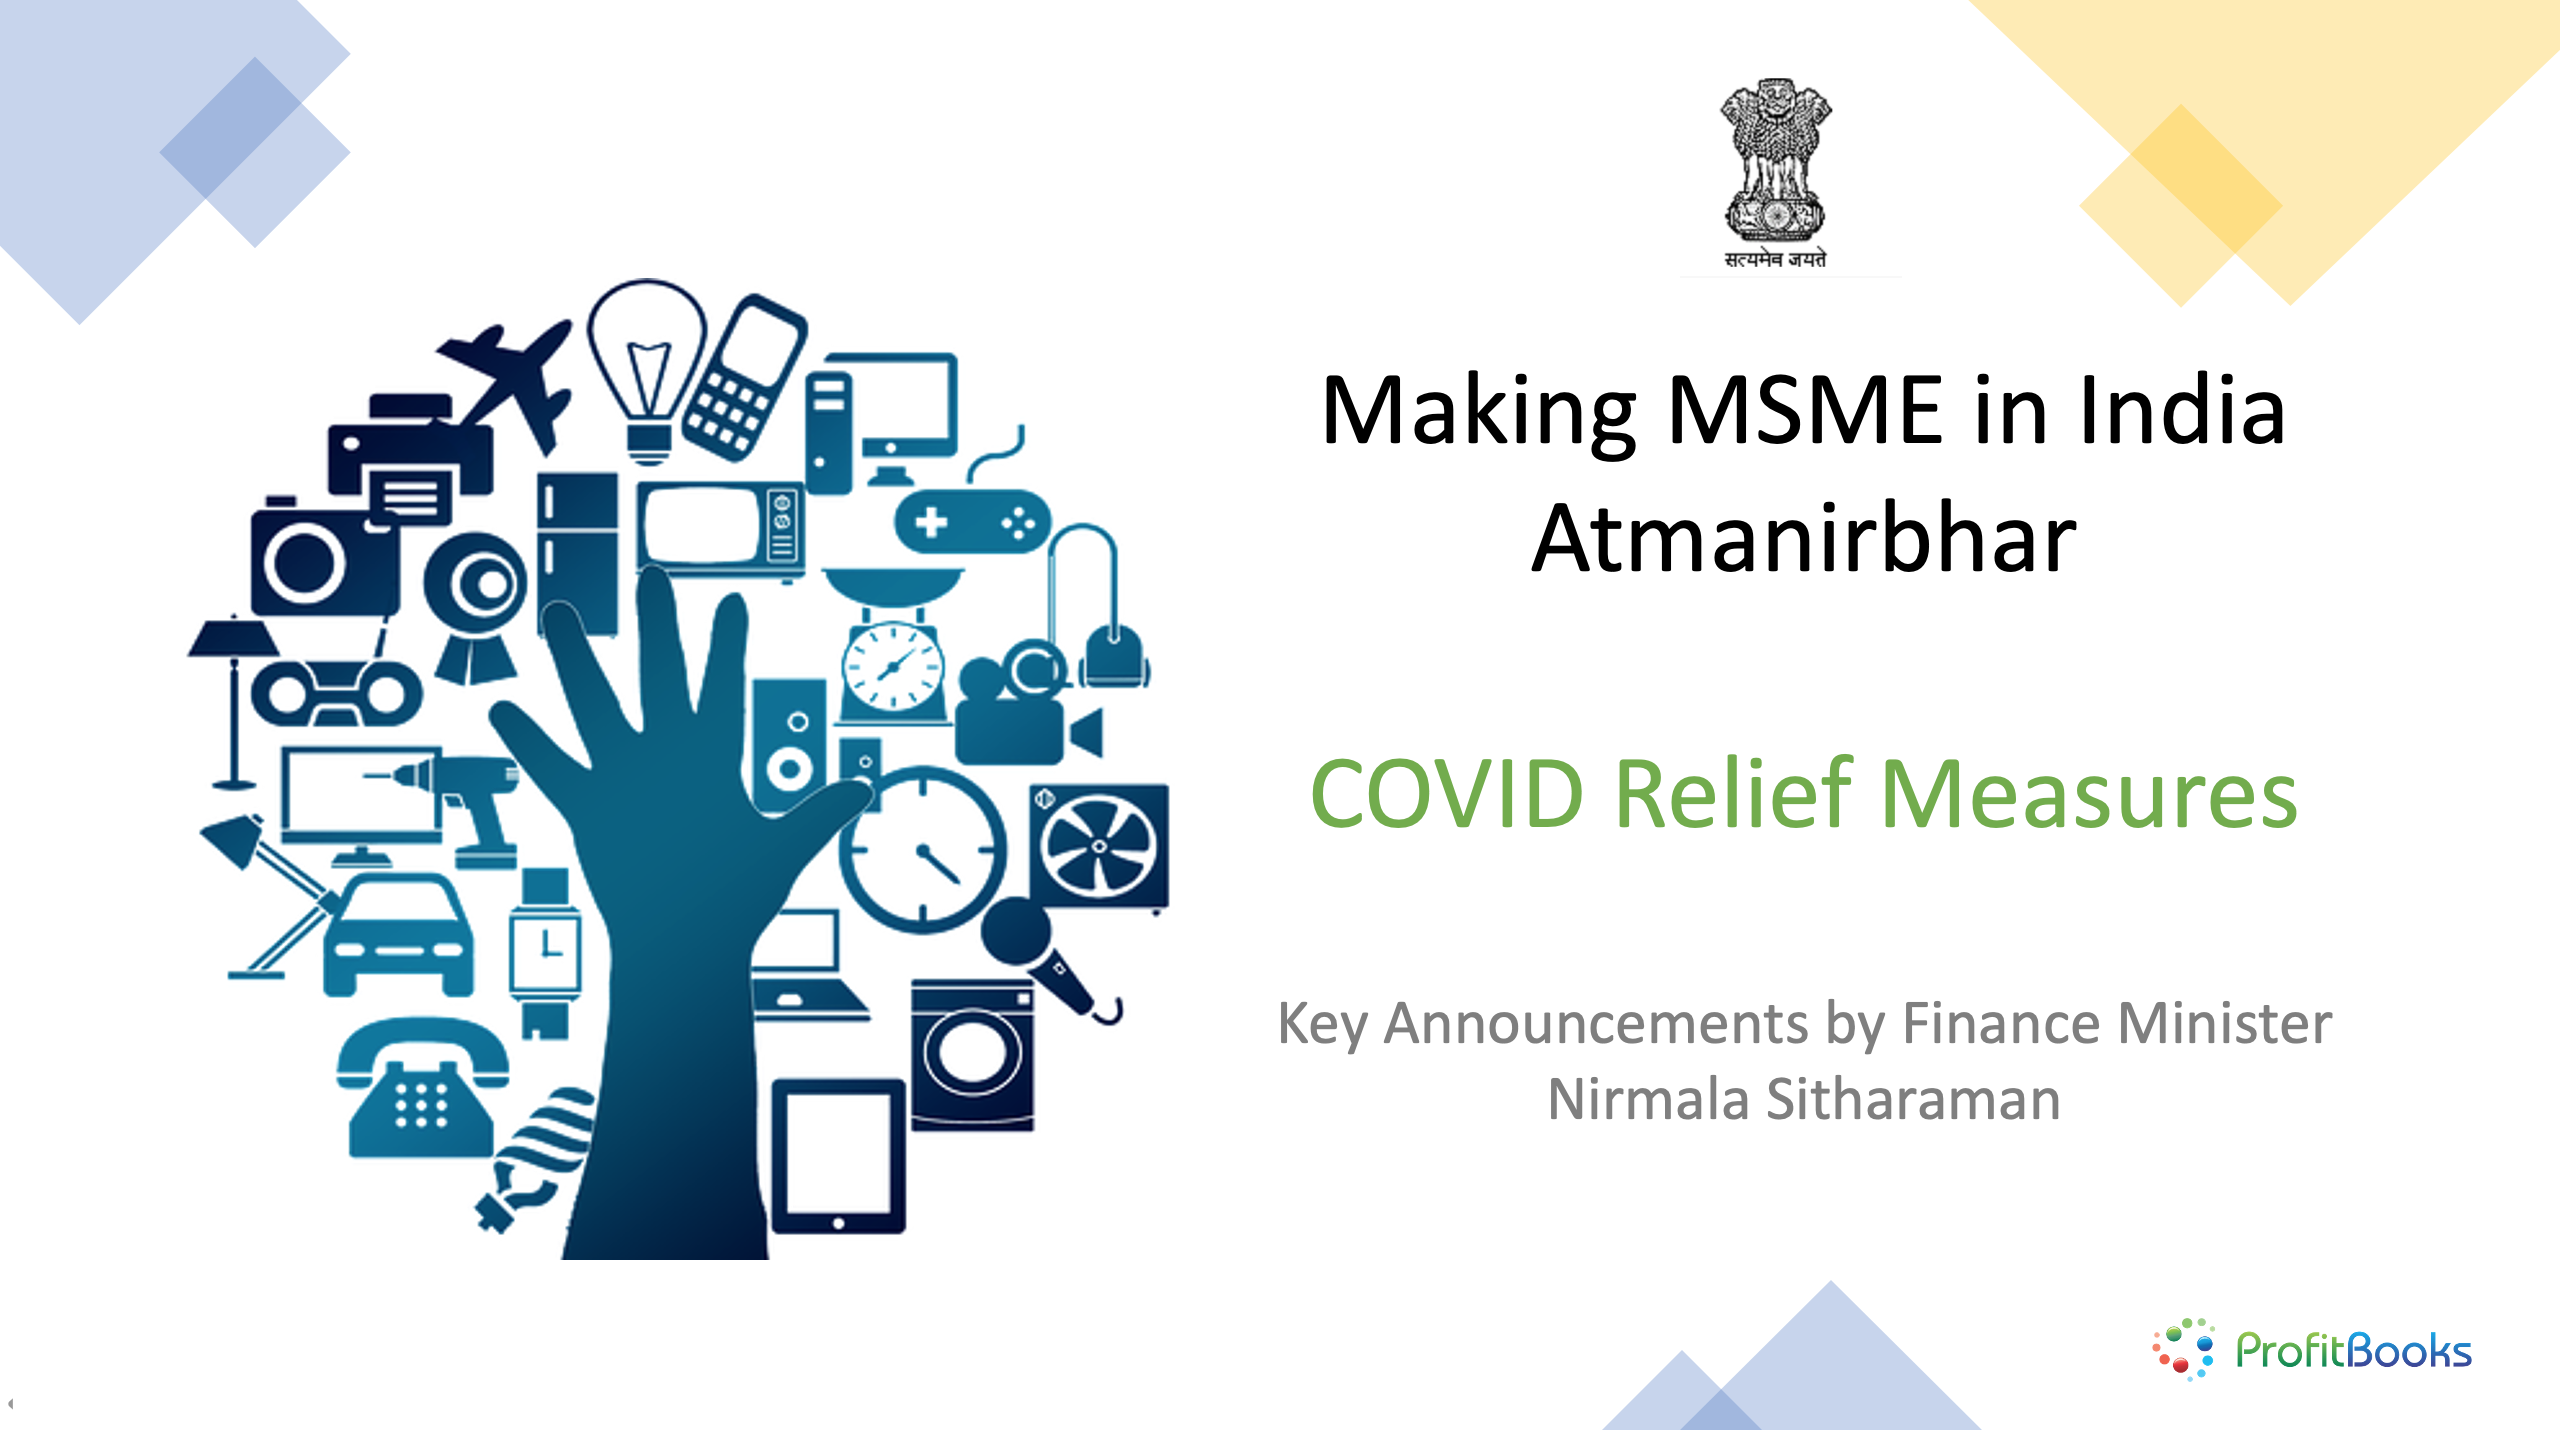 Atmanirbhar Bharat Benefits MSME